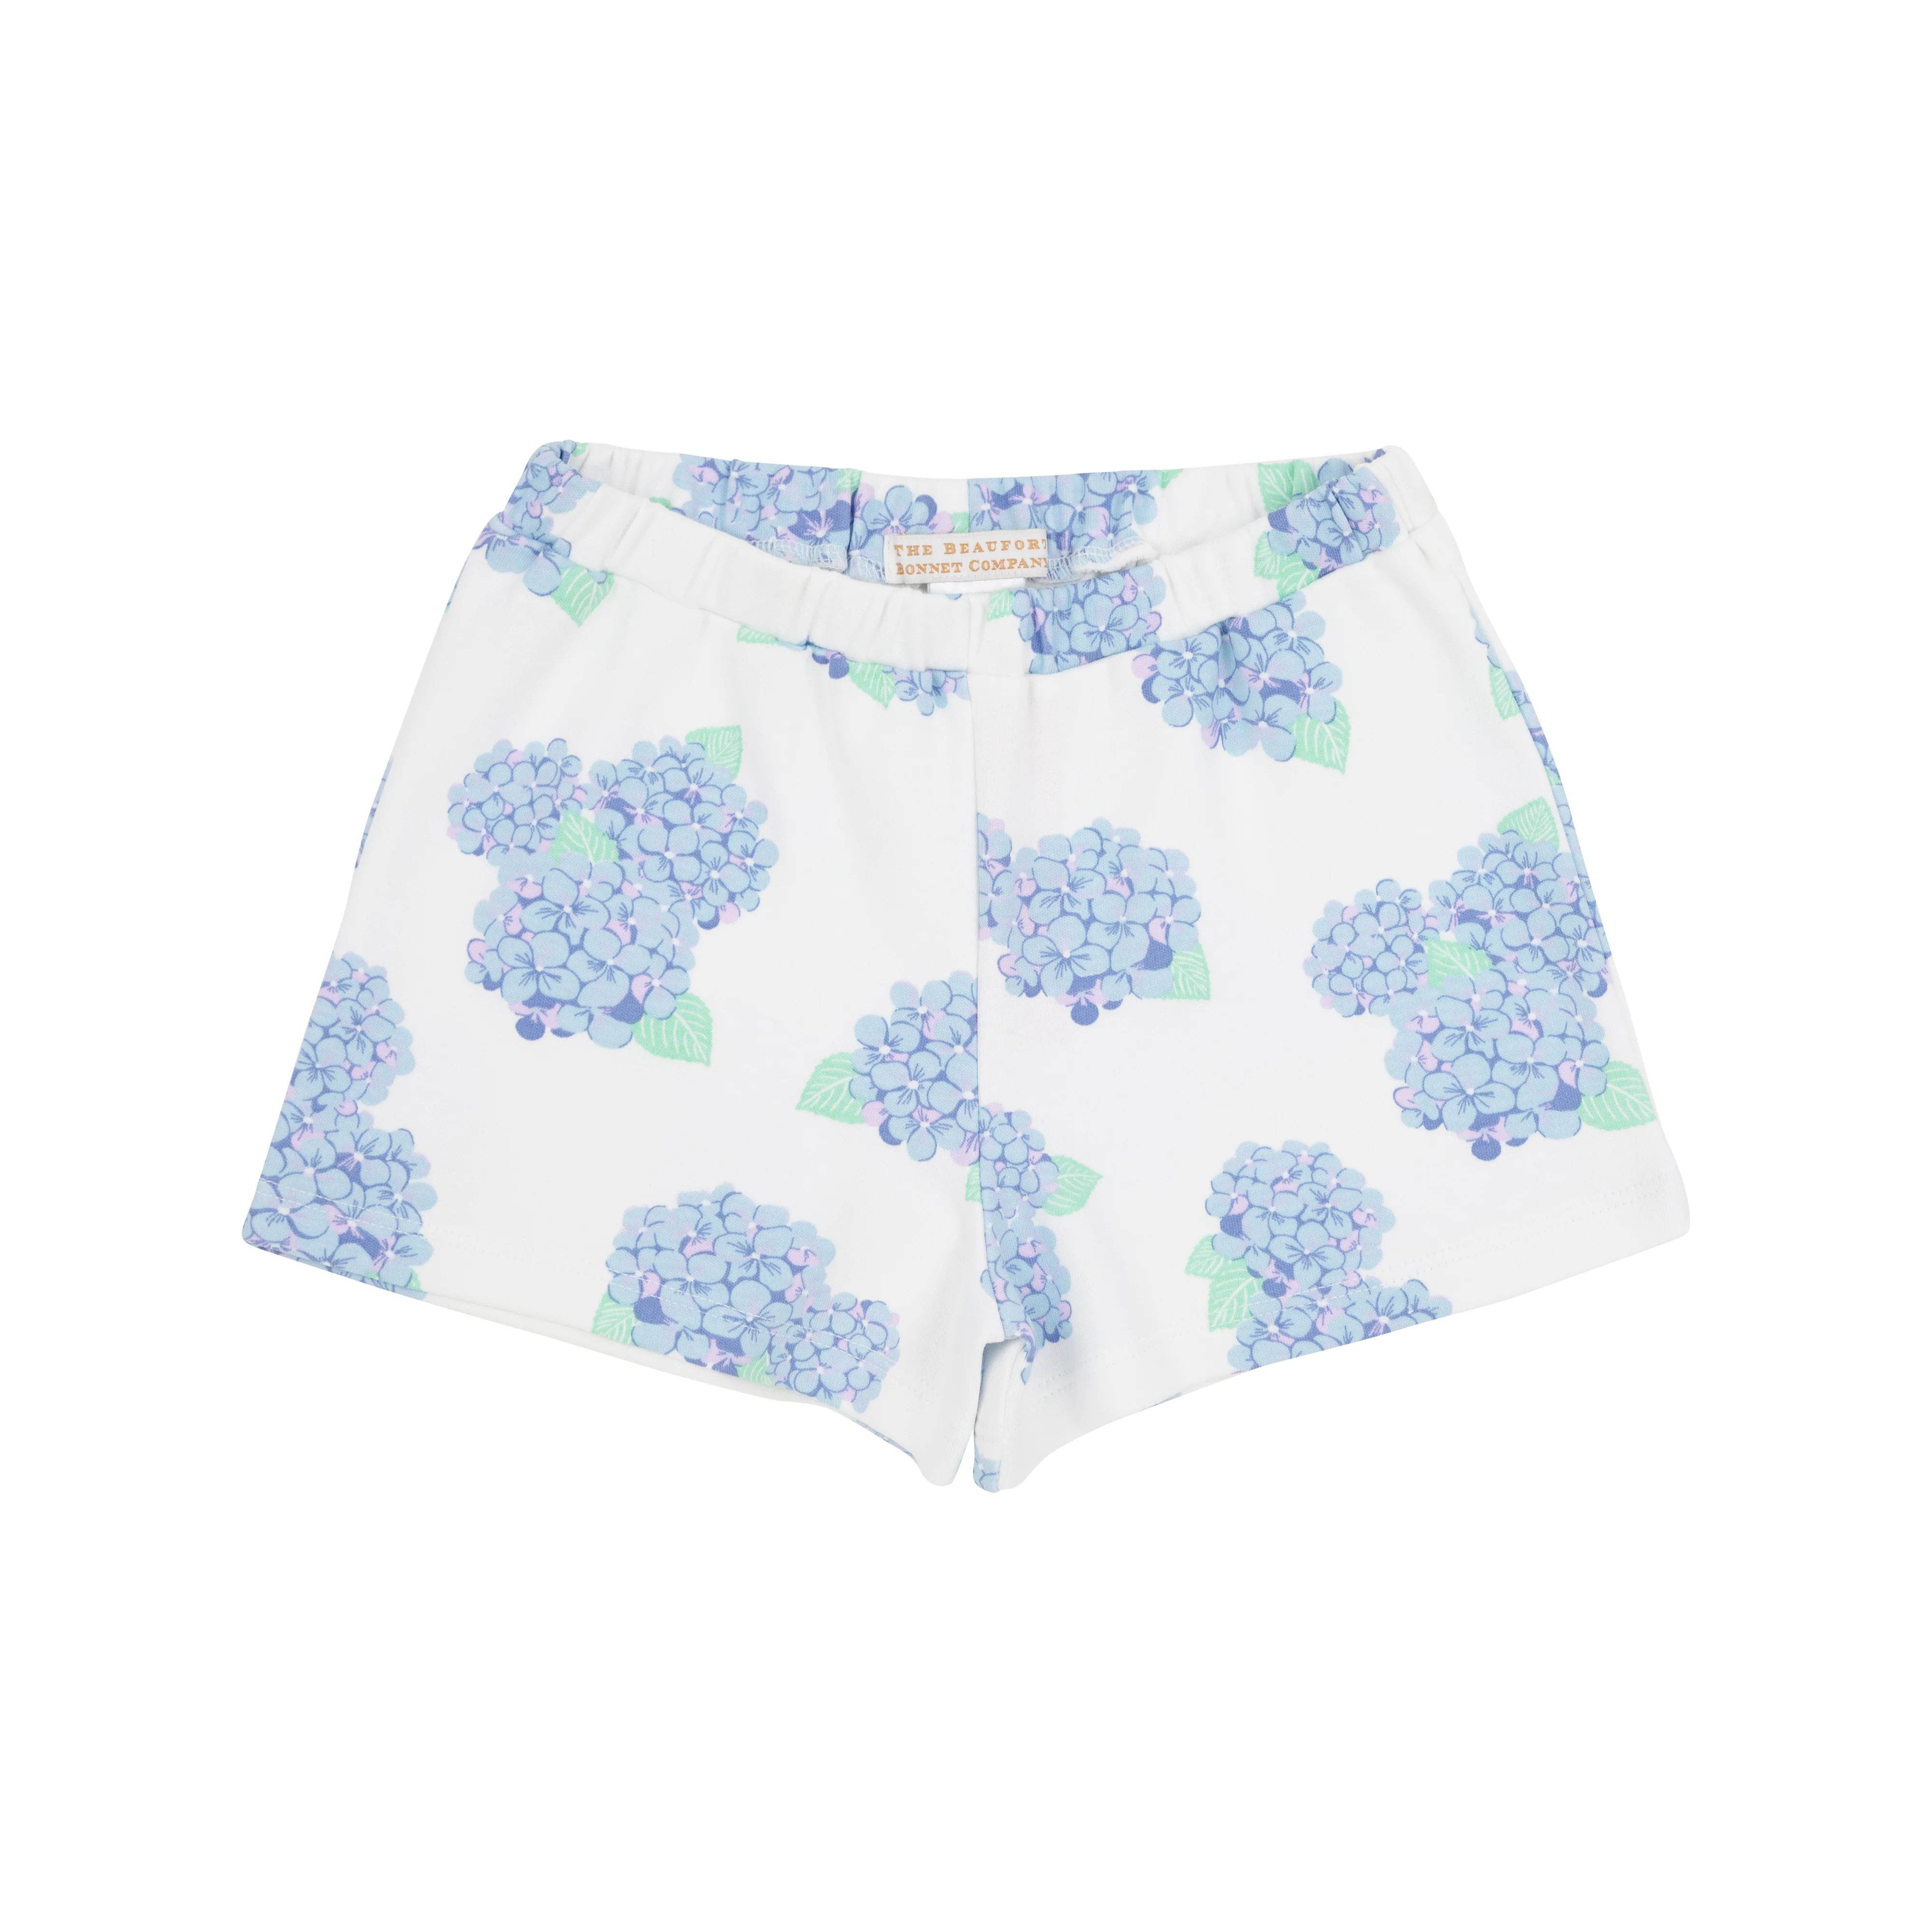 Shipley Shorts - Happiest Hydrangeas | The Beaufort Bonnet Company